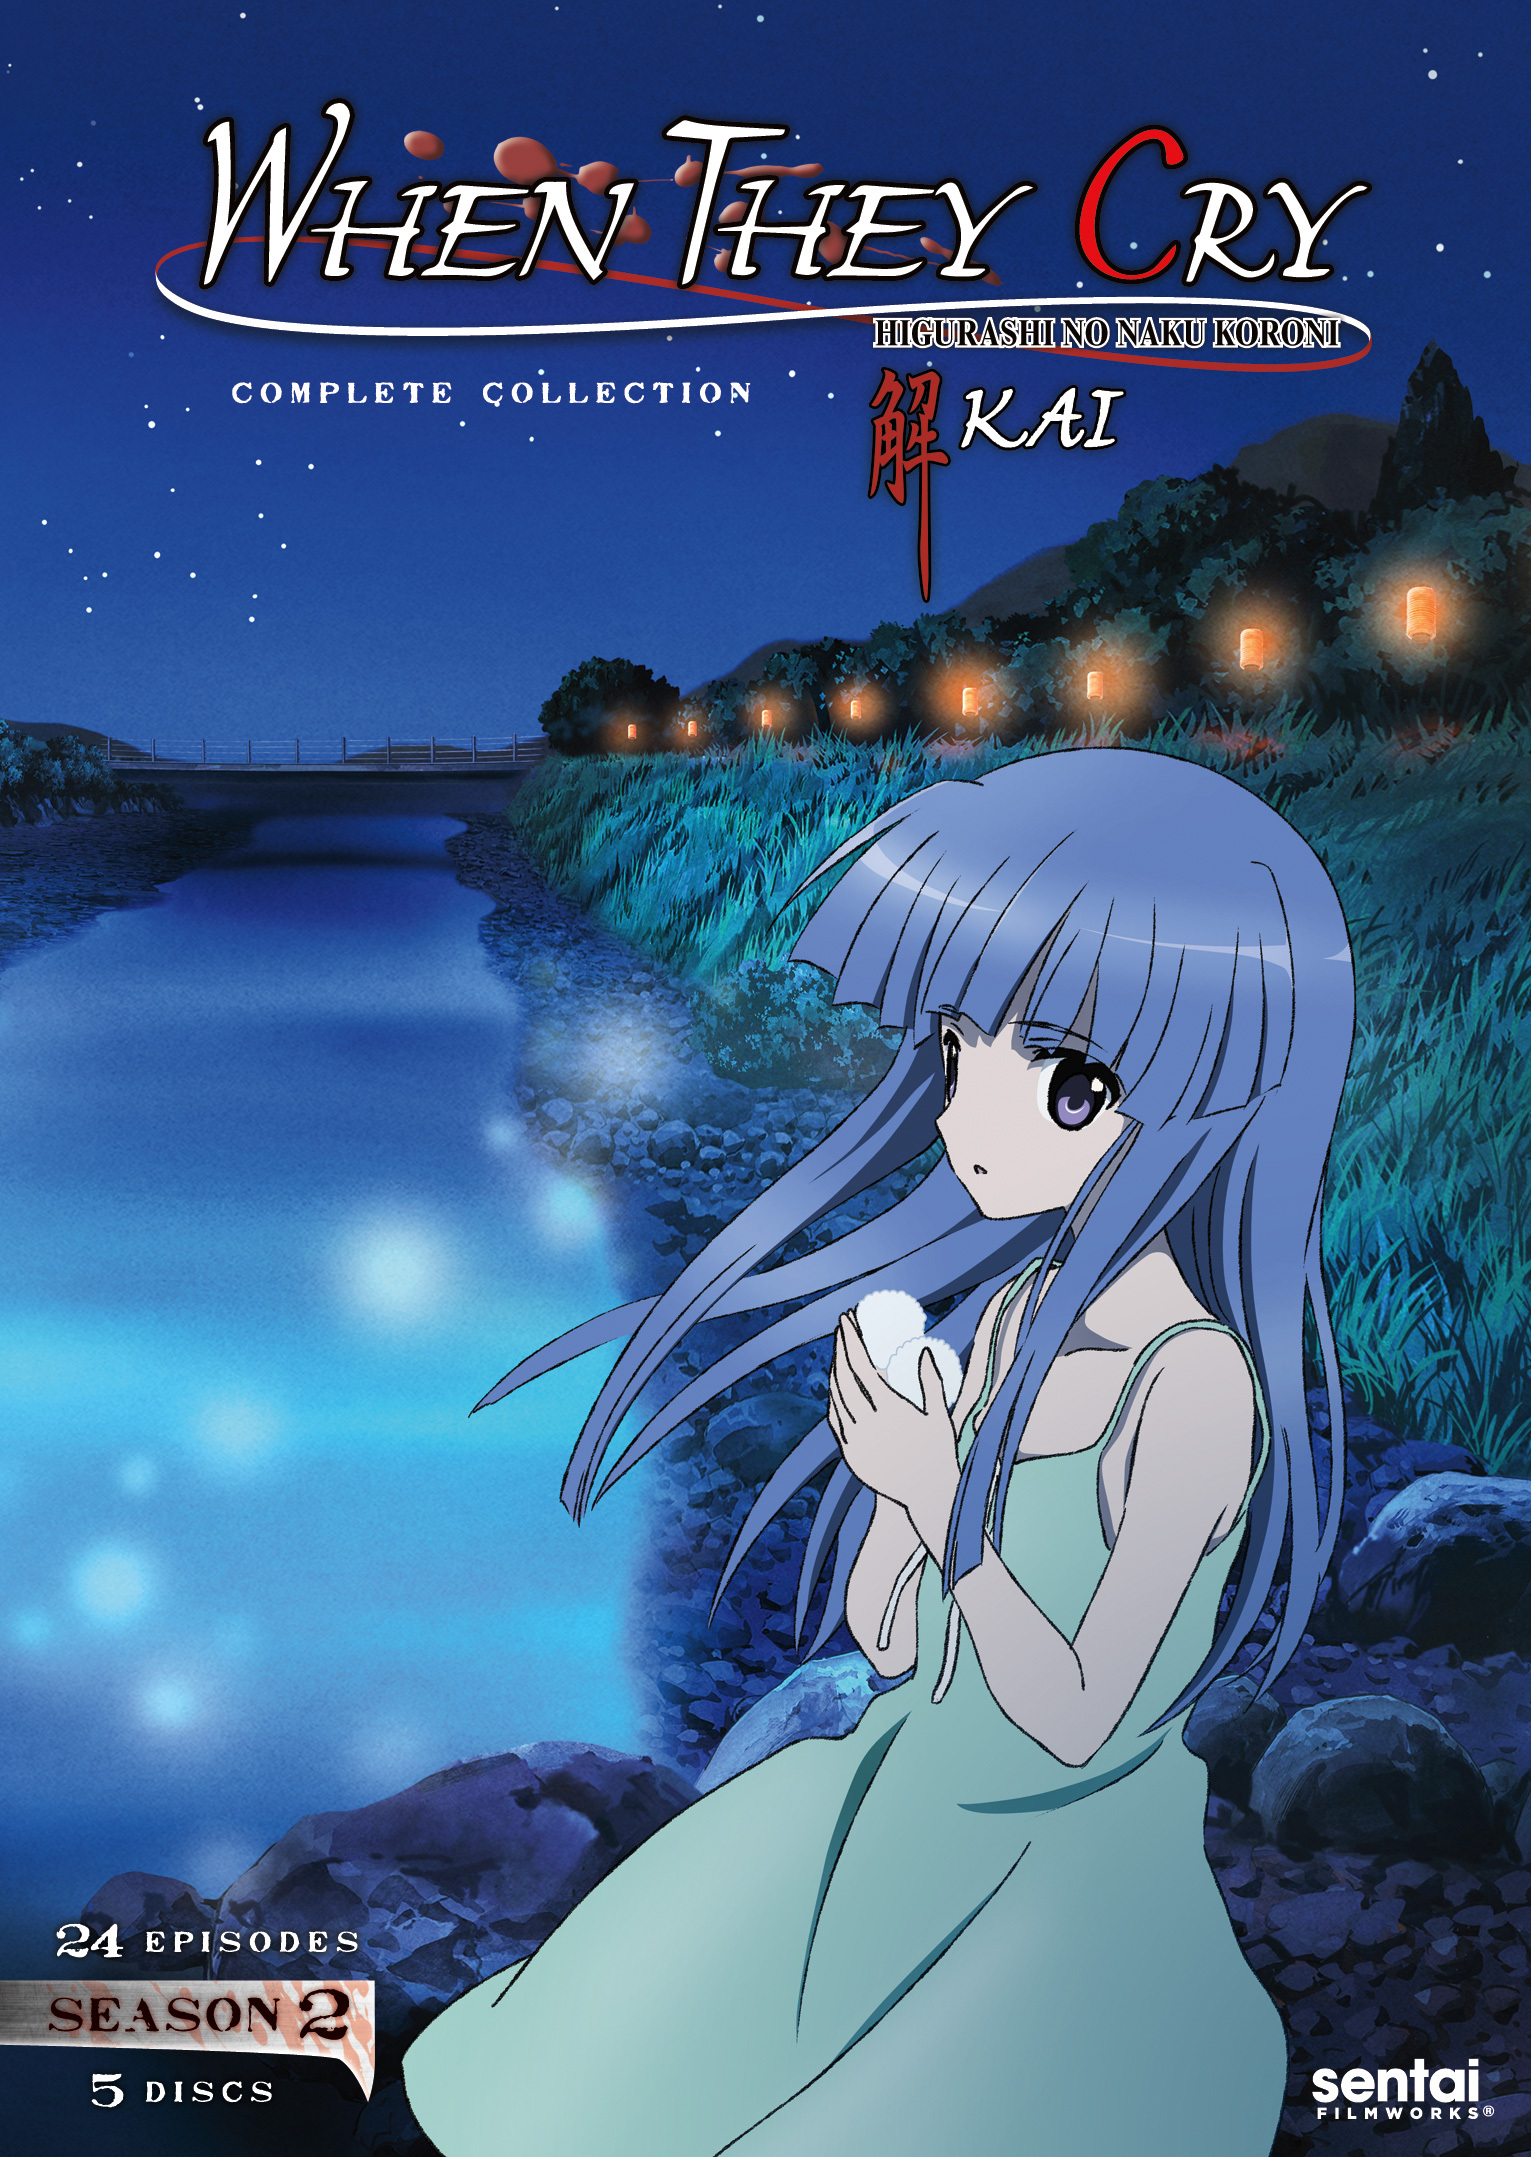 Shin IkkiTousen Anime Serie Ova 1-3 UNCENSORED Dual Audio English